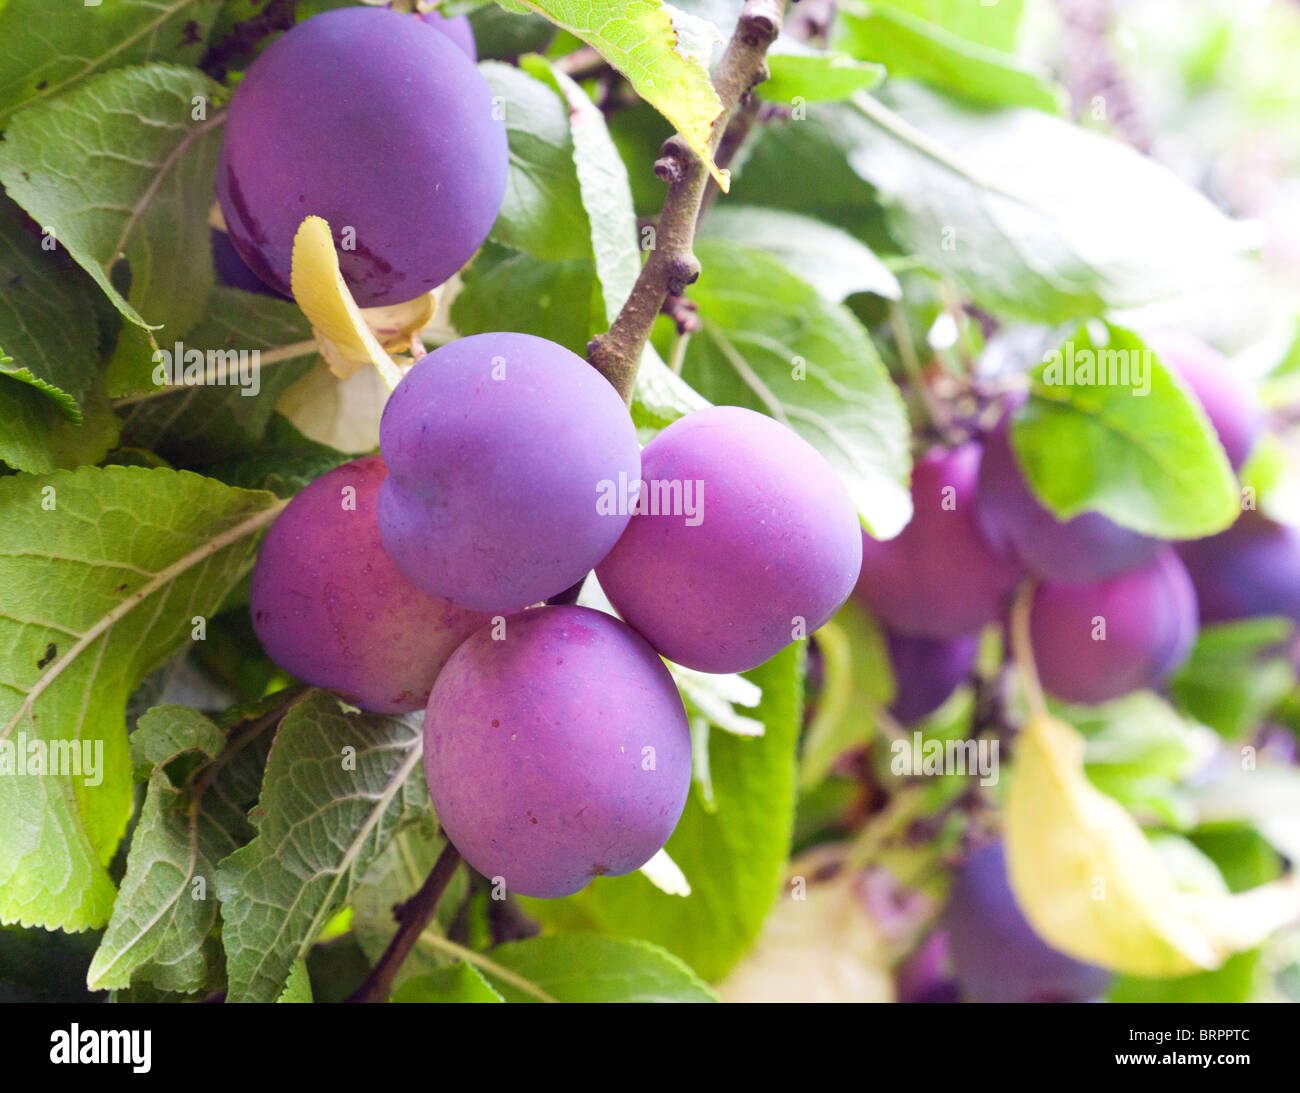 plums on tree Stock Photo